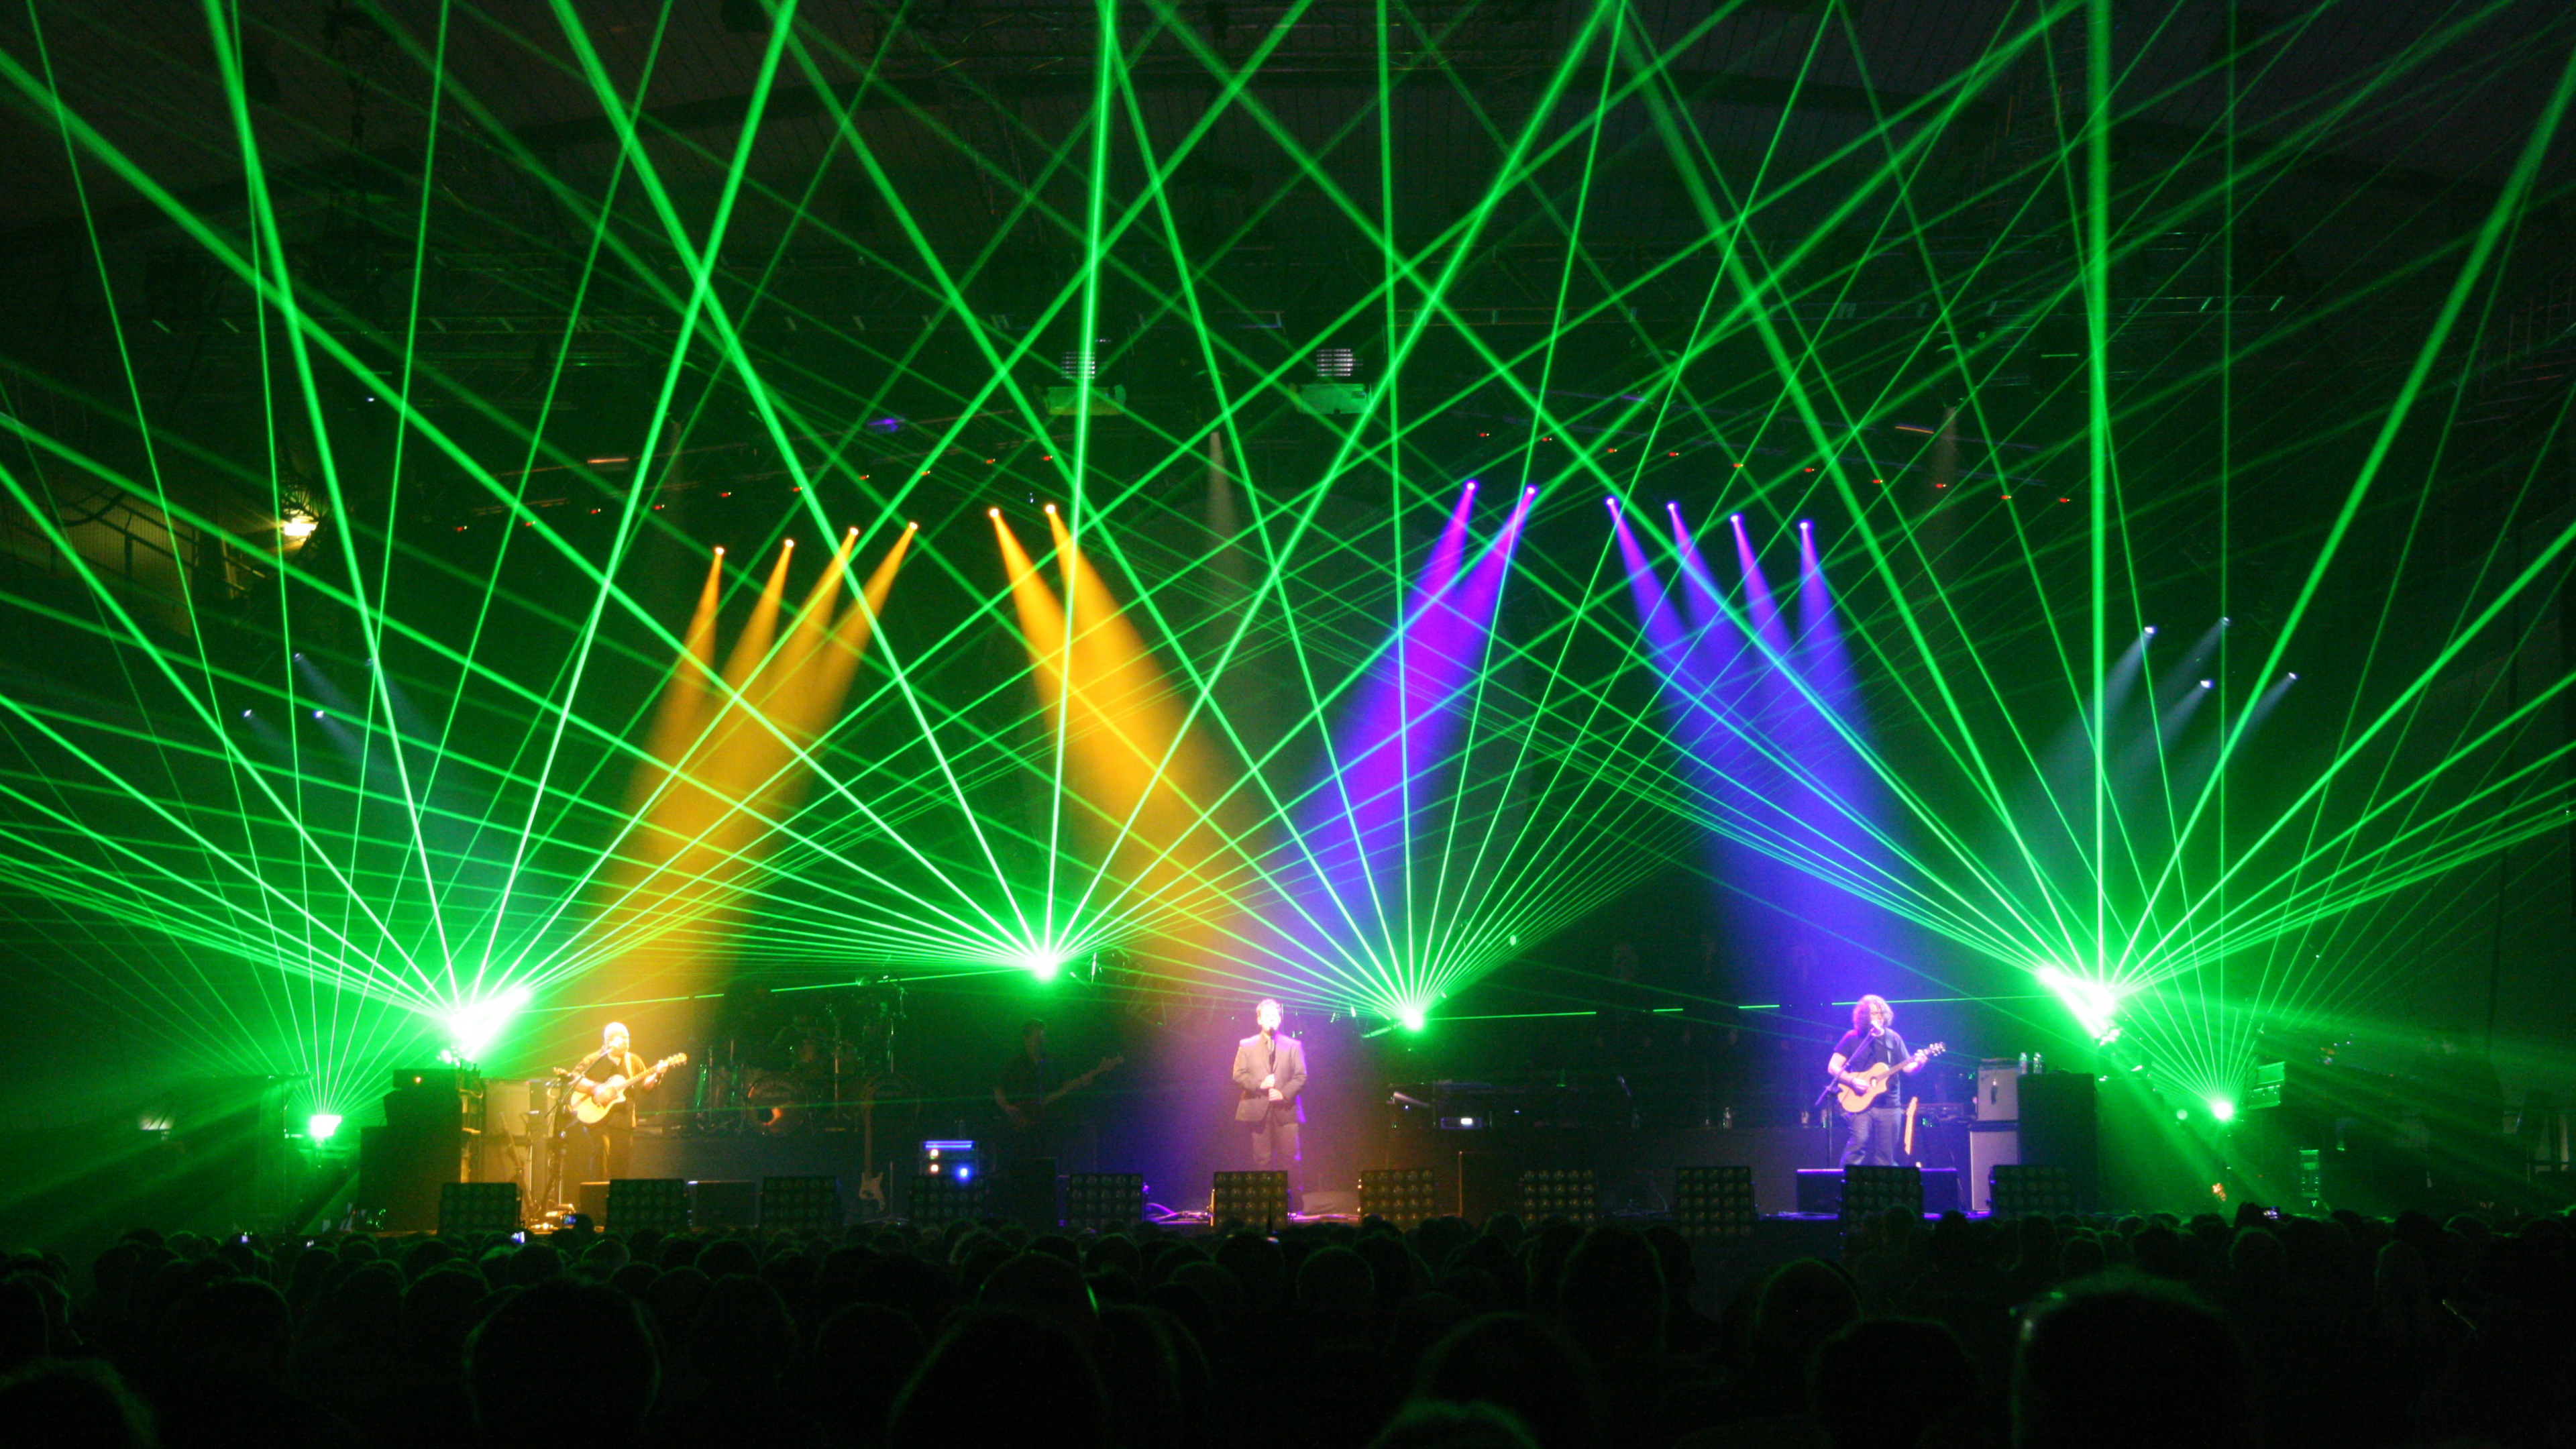 Pink Floyd, The Australian Pink Floyd Show, Concert, Green, Light. Wallpaper in 3840x2160 Resolution